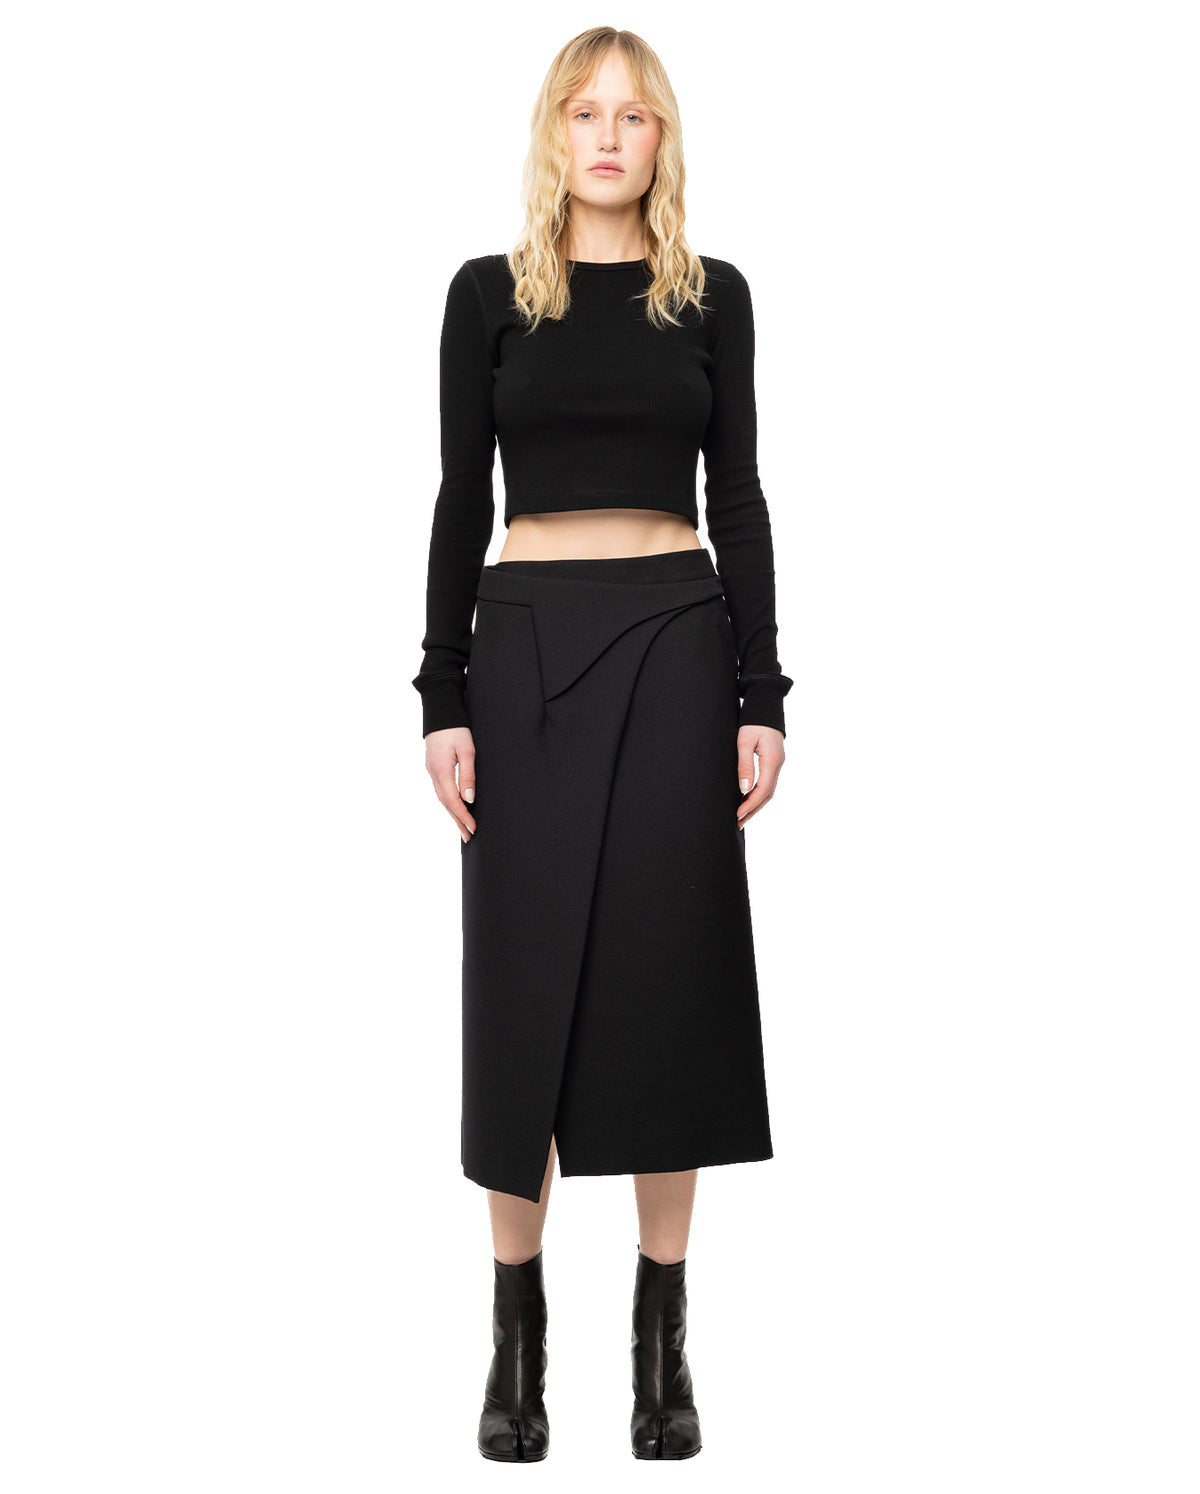 Wrap Midi Skirt - Black